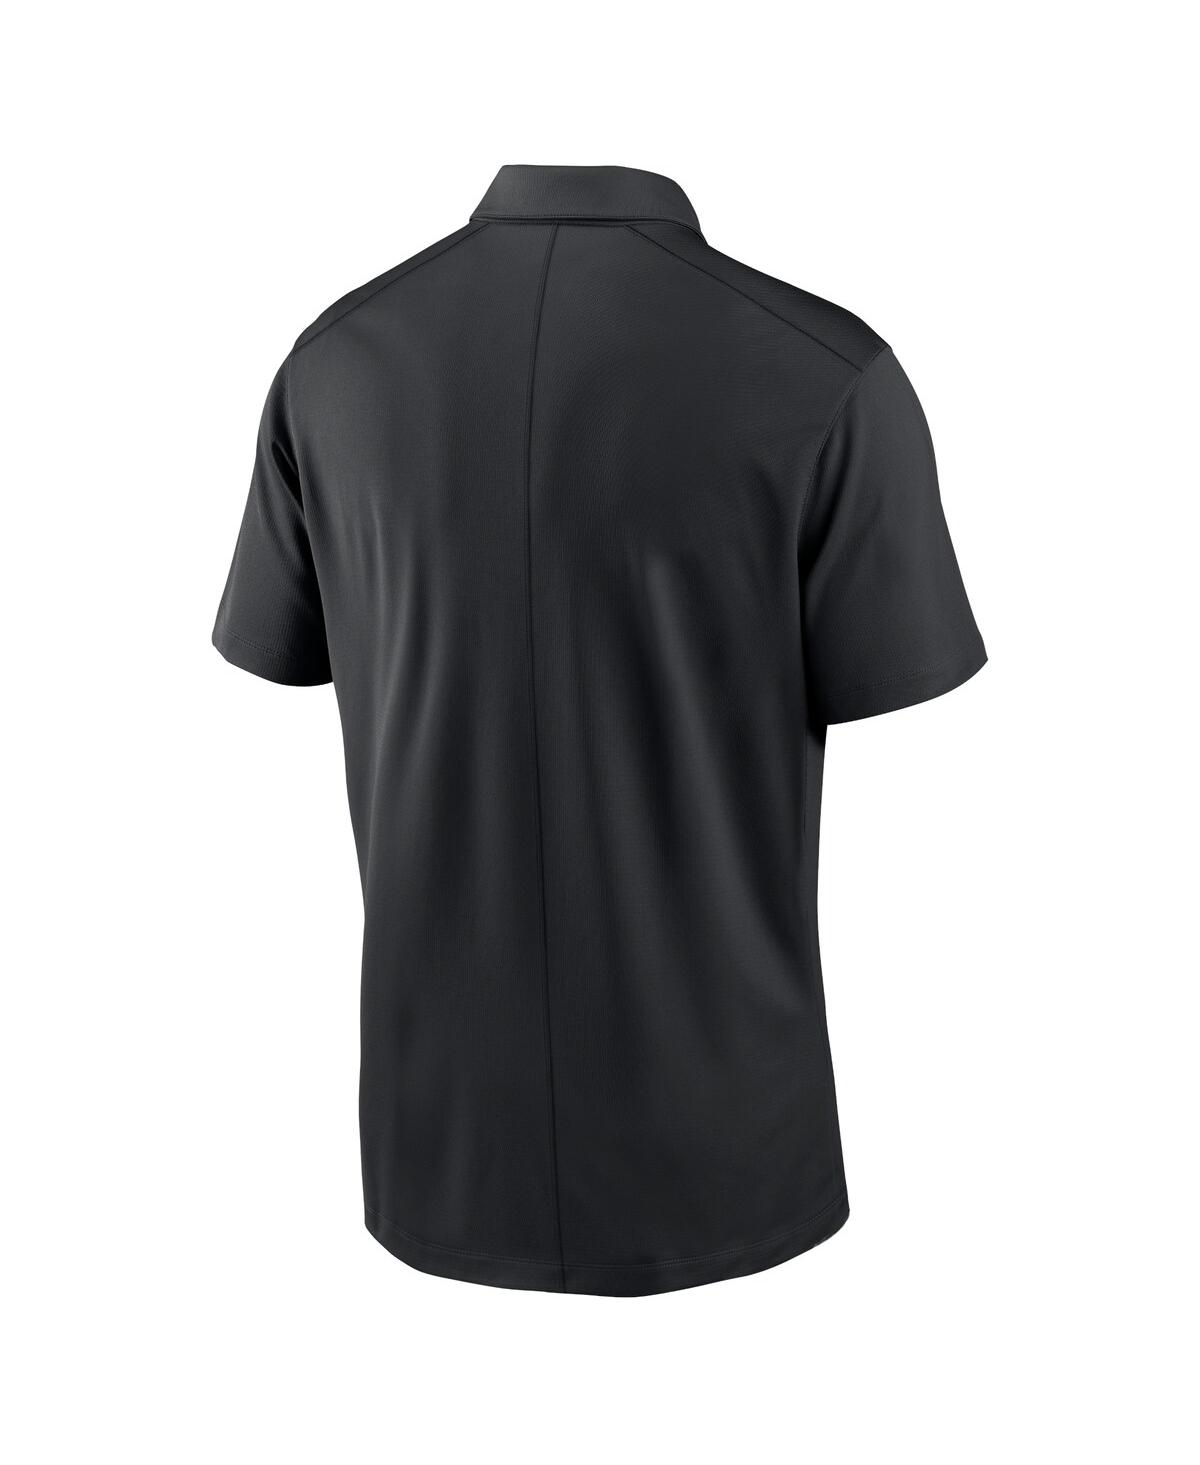 Shop Nike Men's  Navy Chelsea Victory Performance Polo Shirt